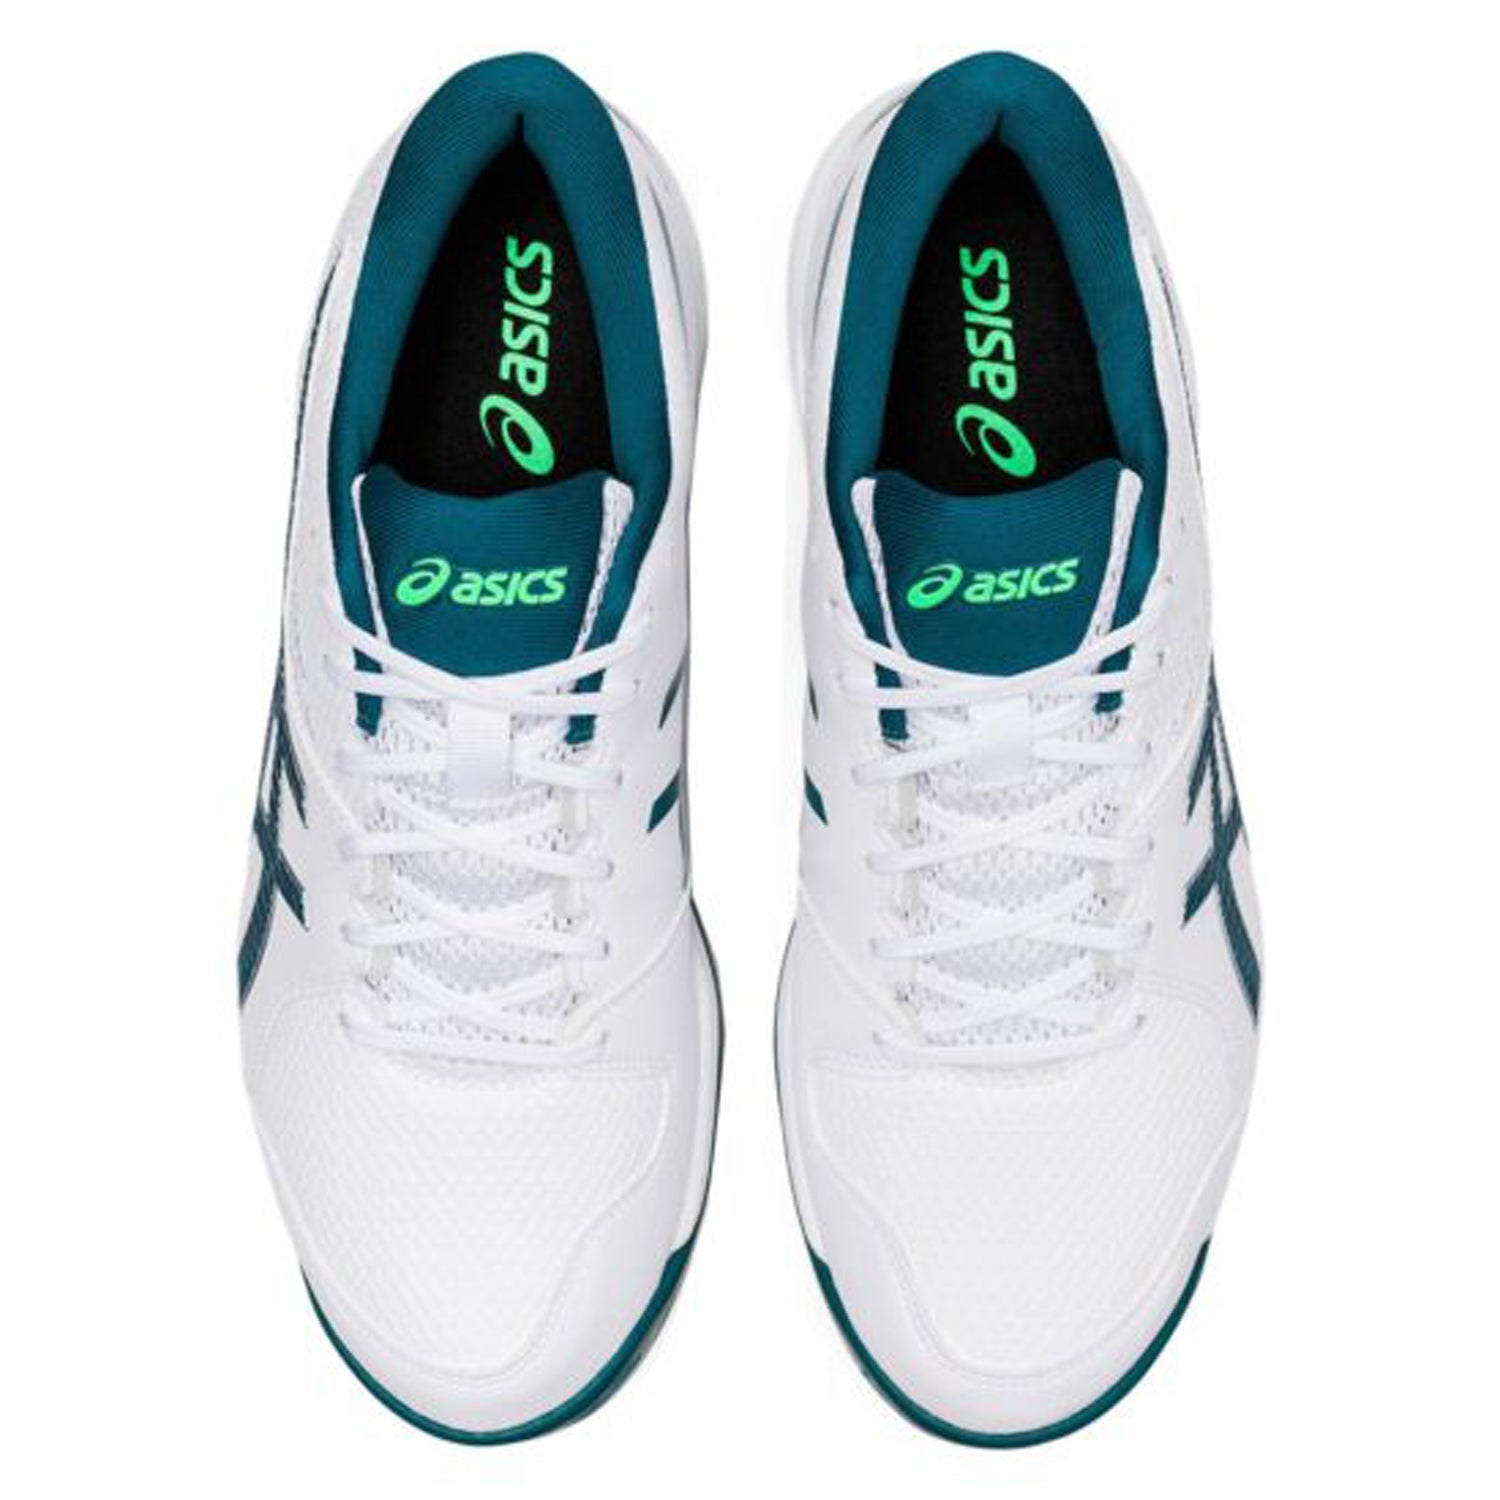 Asics Gel-Peake 2 Men’s Cricket Shoes - Best Price online Prokicksports.com